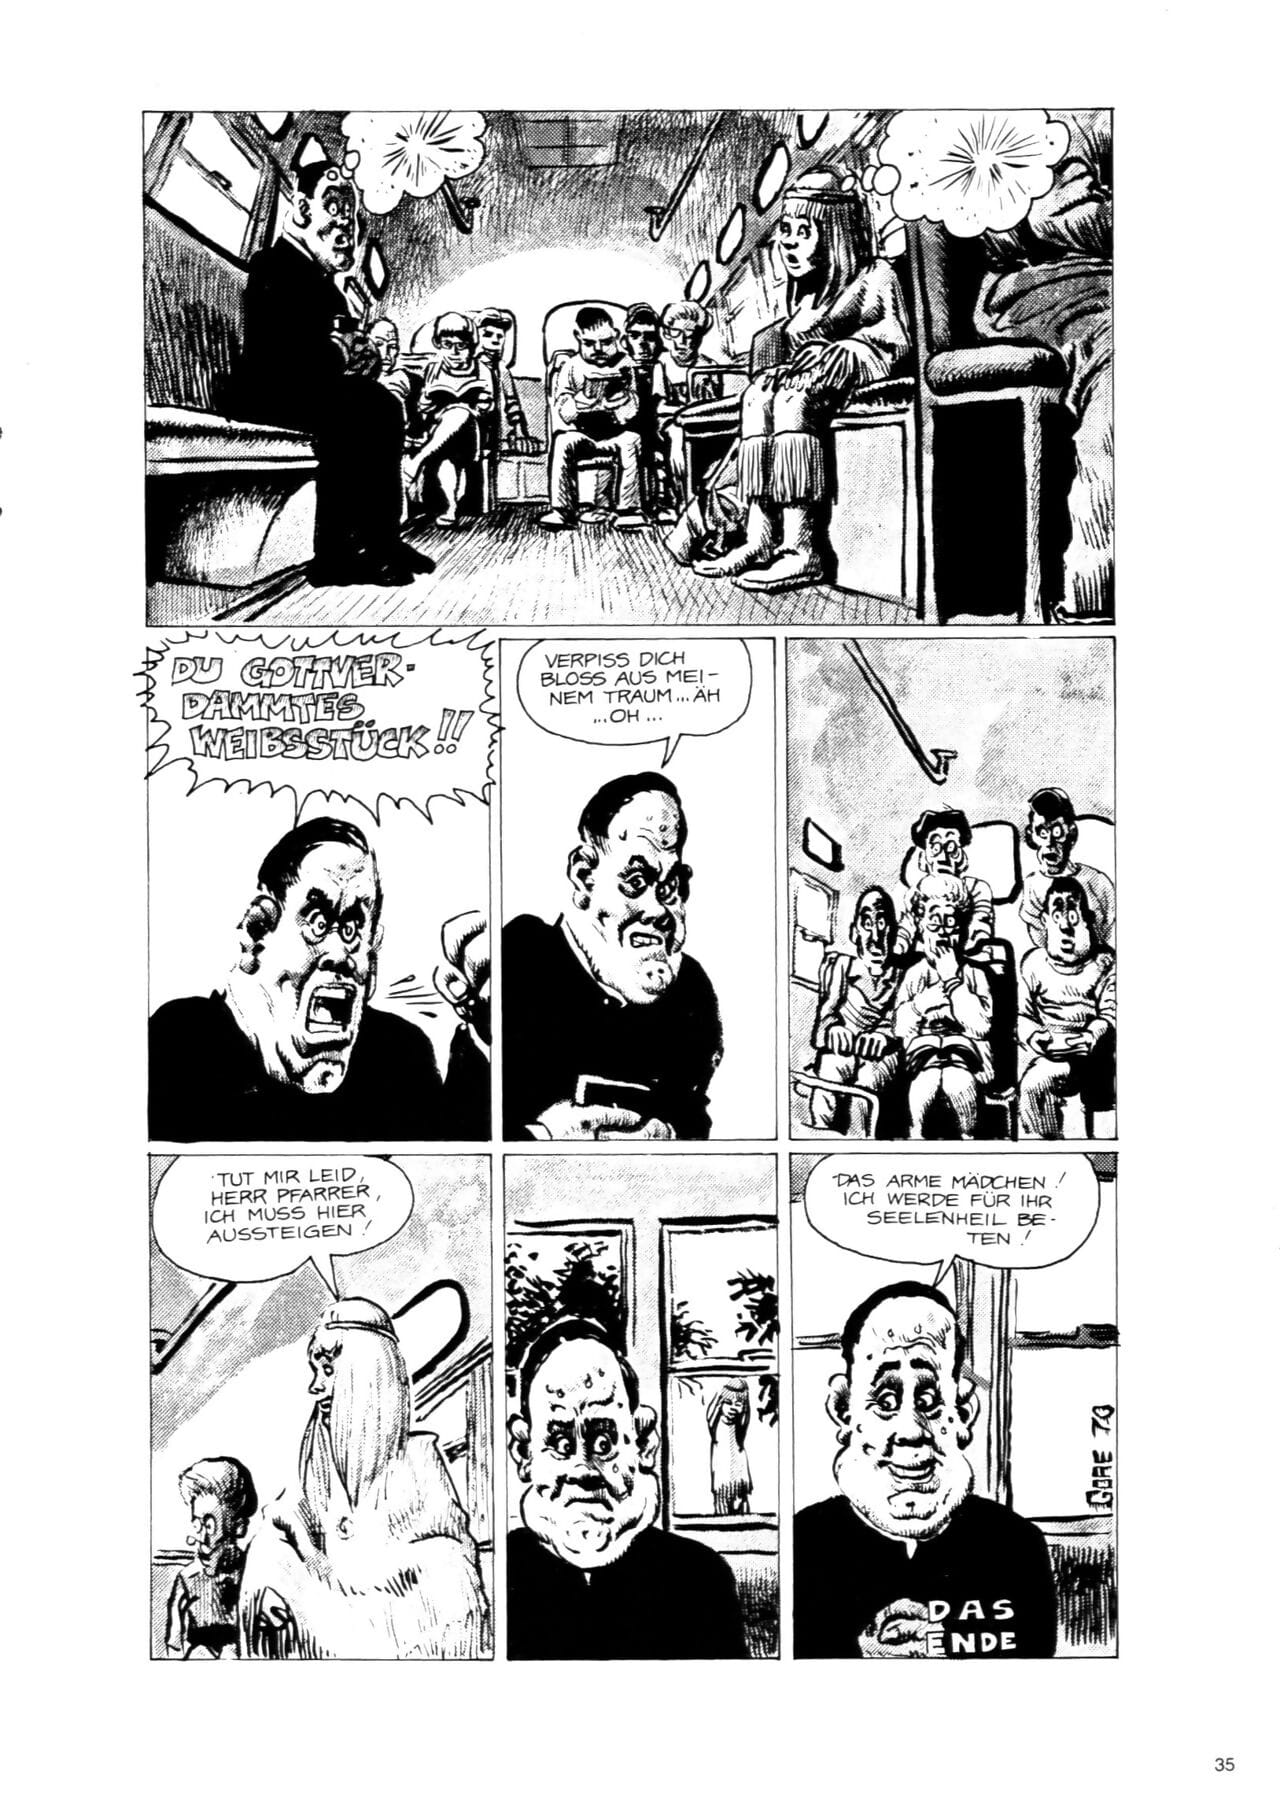 schwermetall #056 PART 2 page 1